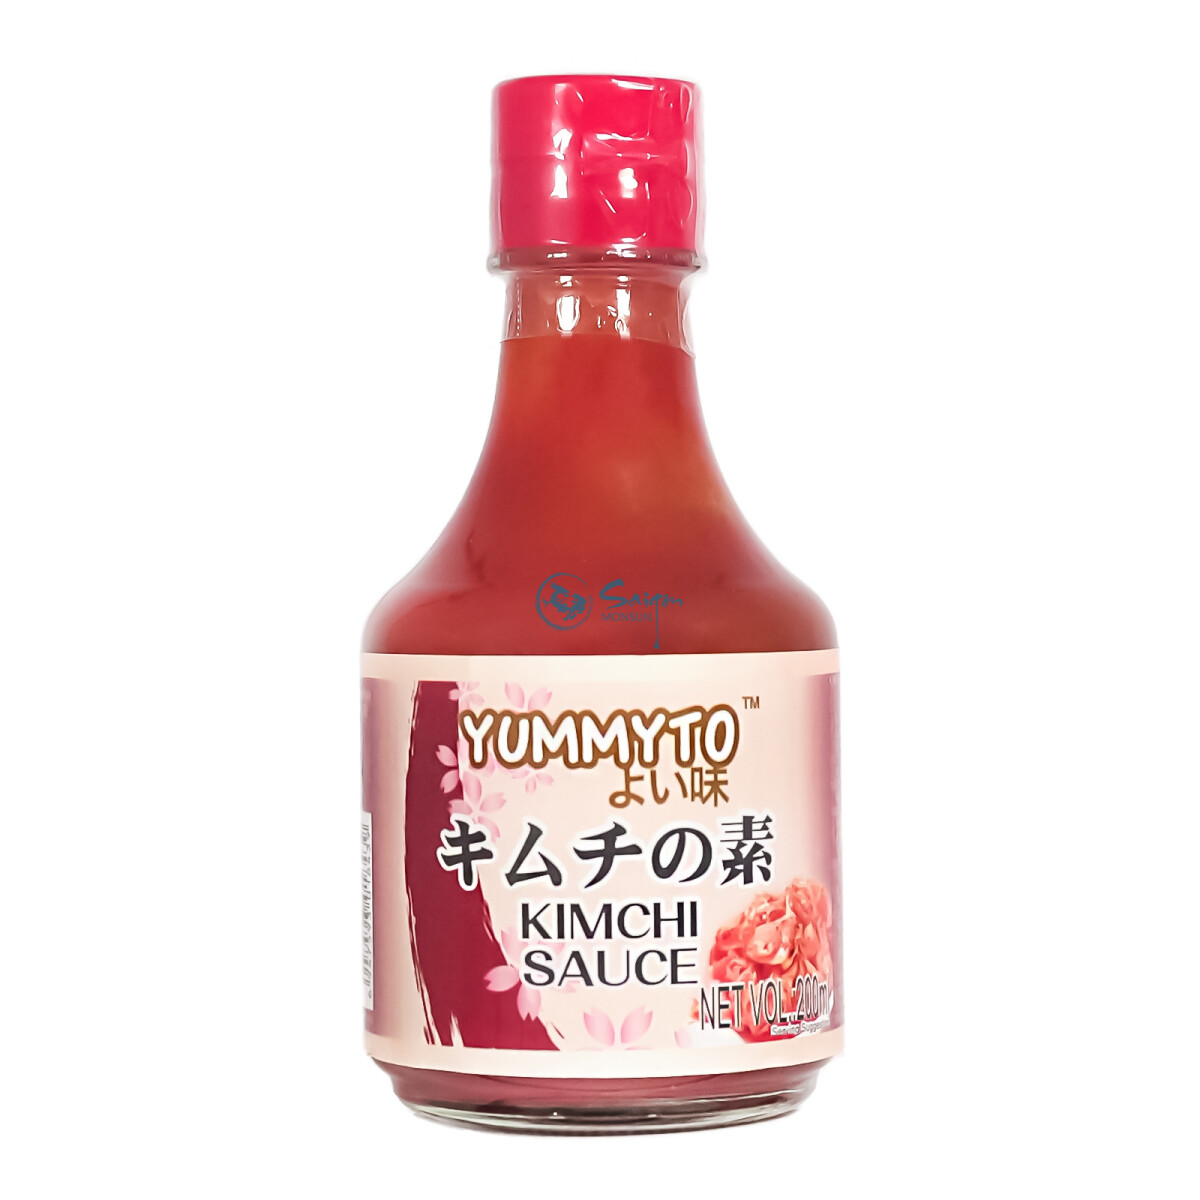 !! *Yummyto Kimchi Sauce 200ml